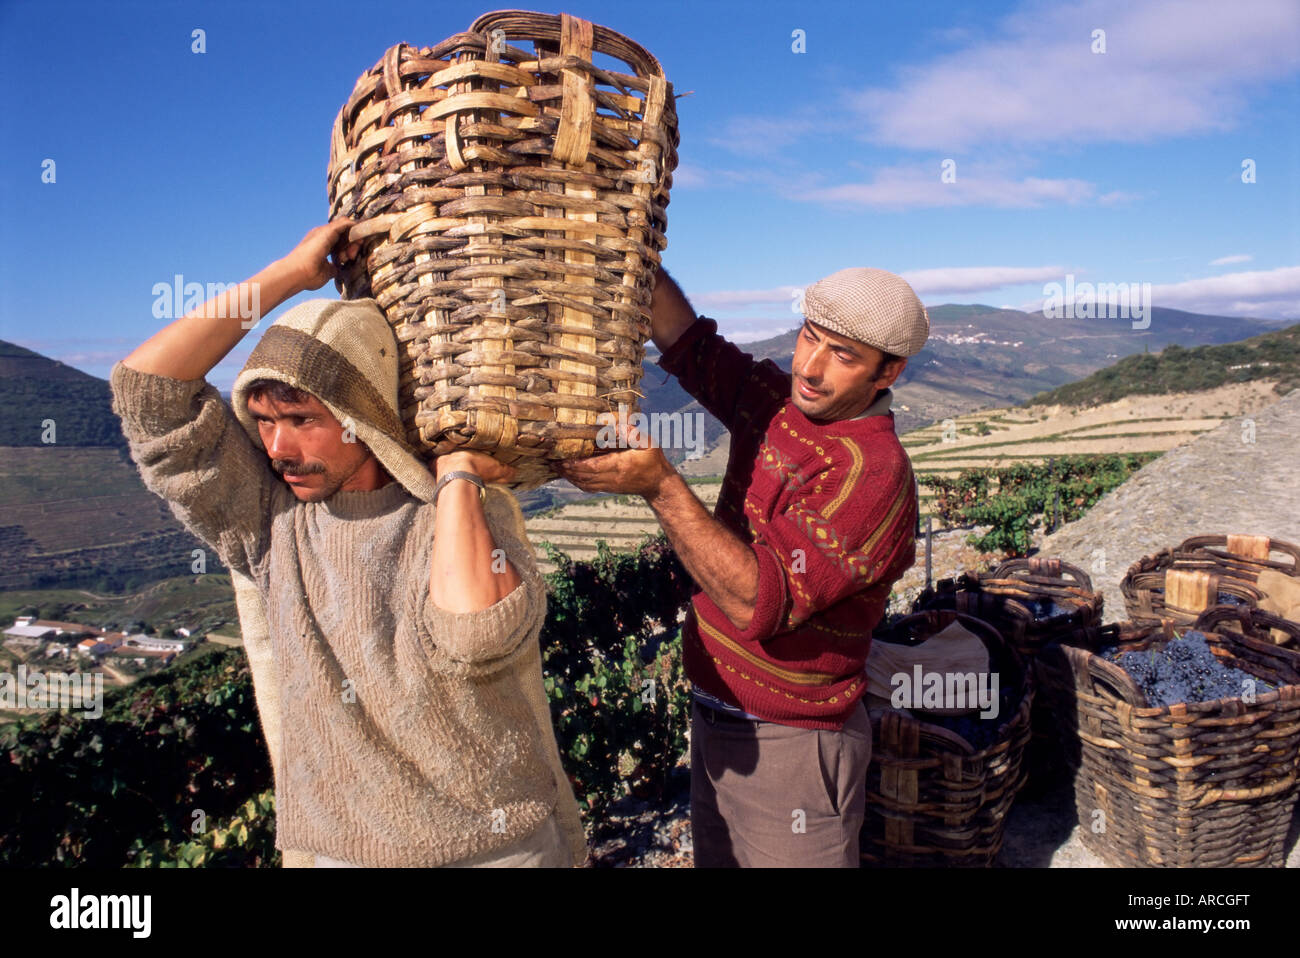 Grape pickers lifting baskets, Quinta do Bomfim, Douro, Portugal, Europe Stock Photo